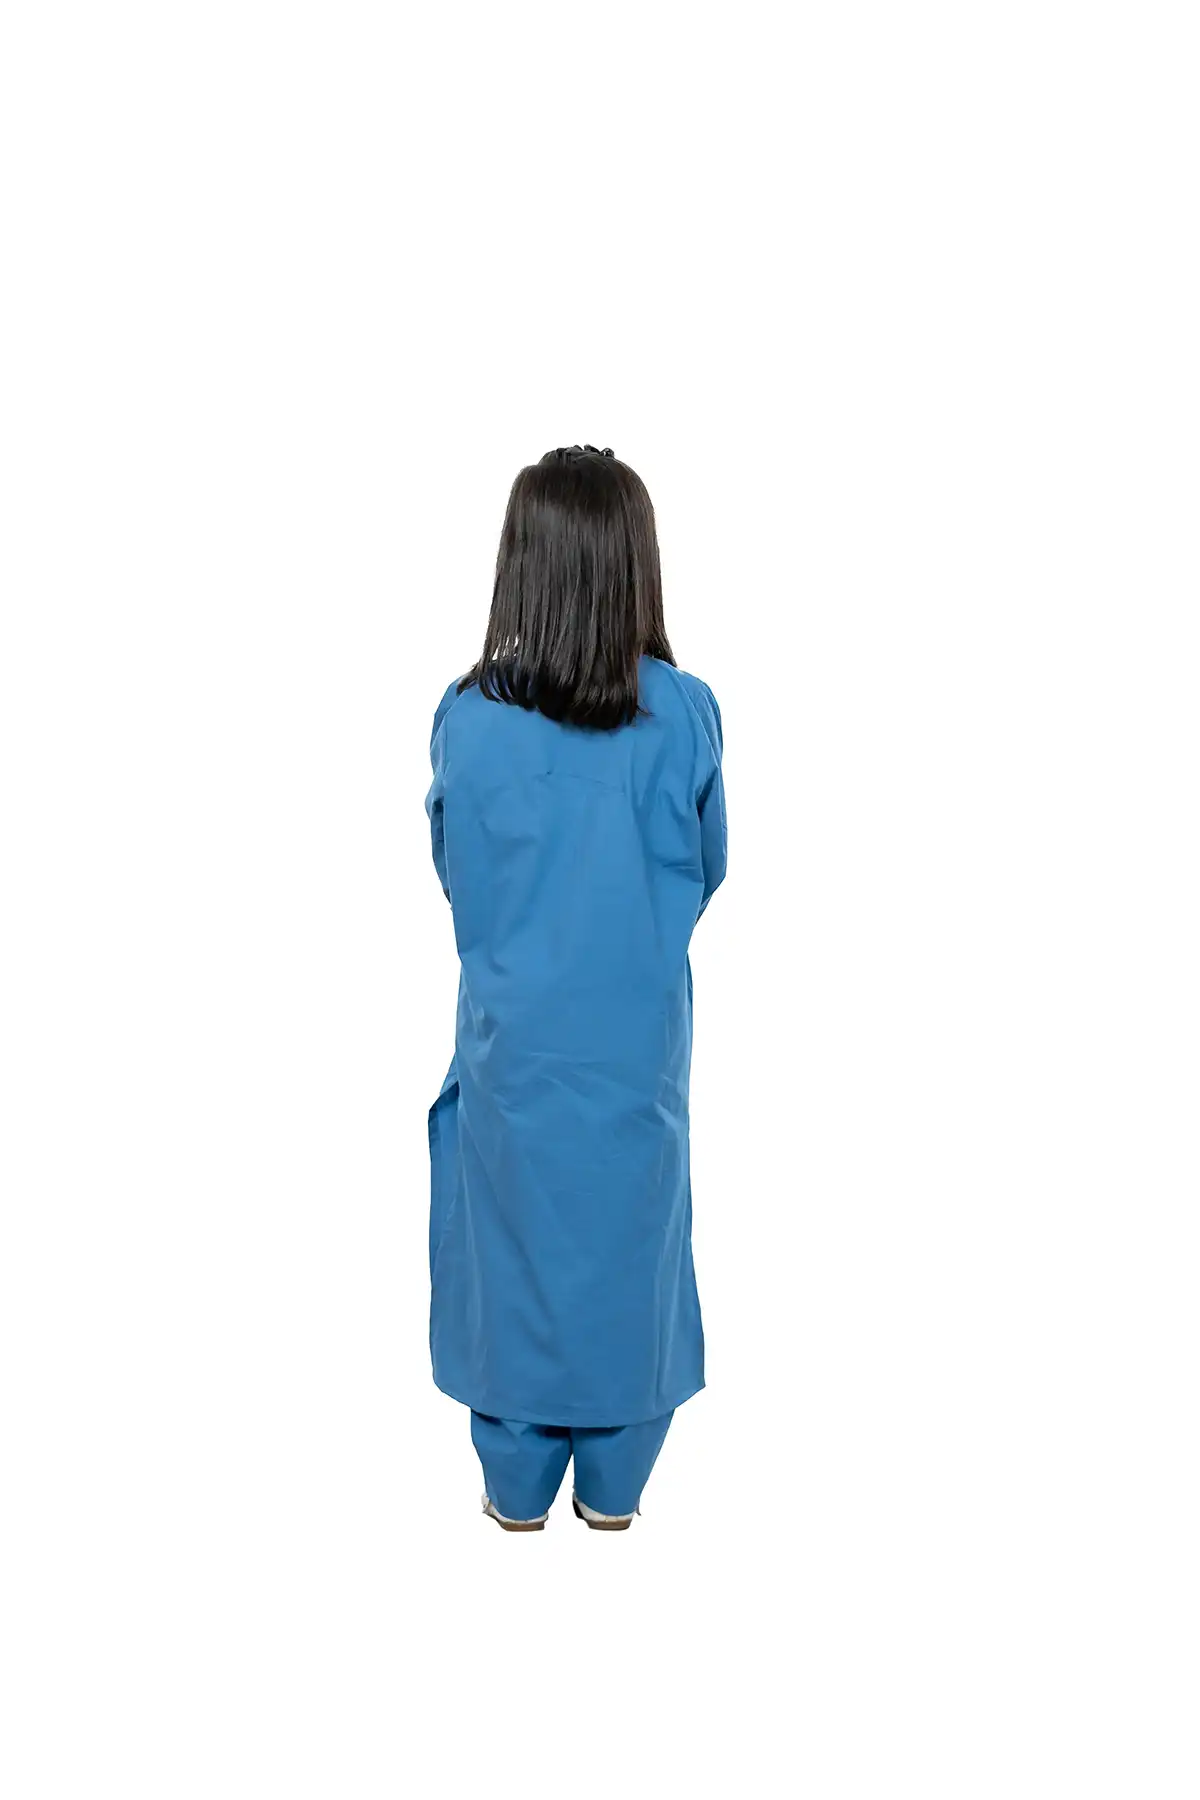 Girls Kameez With Embroidered Bell Bottom Sleeves - Carolina Blue